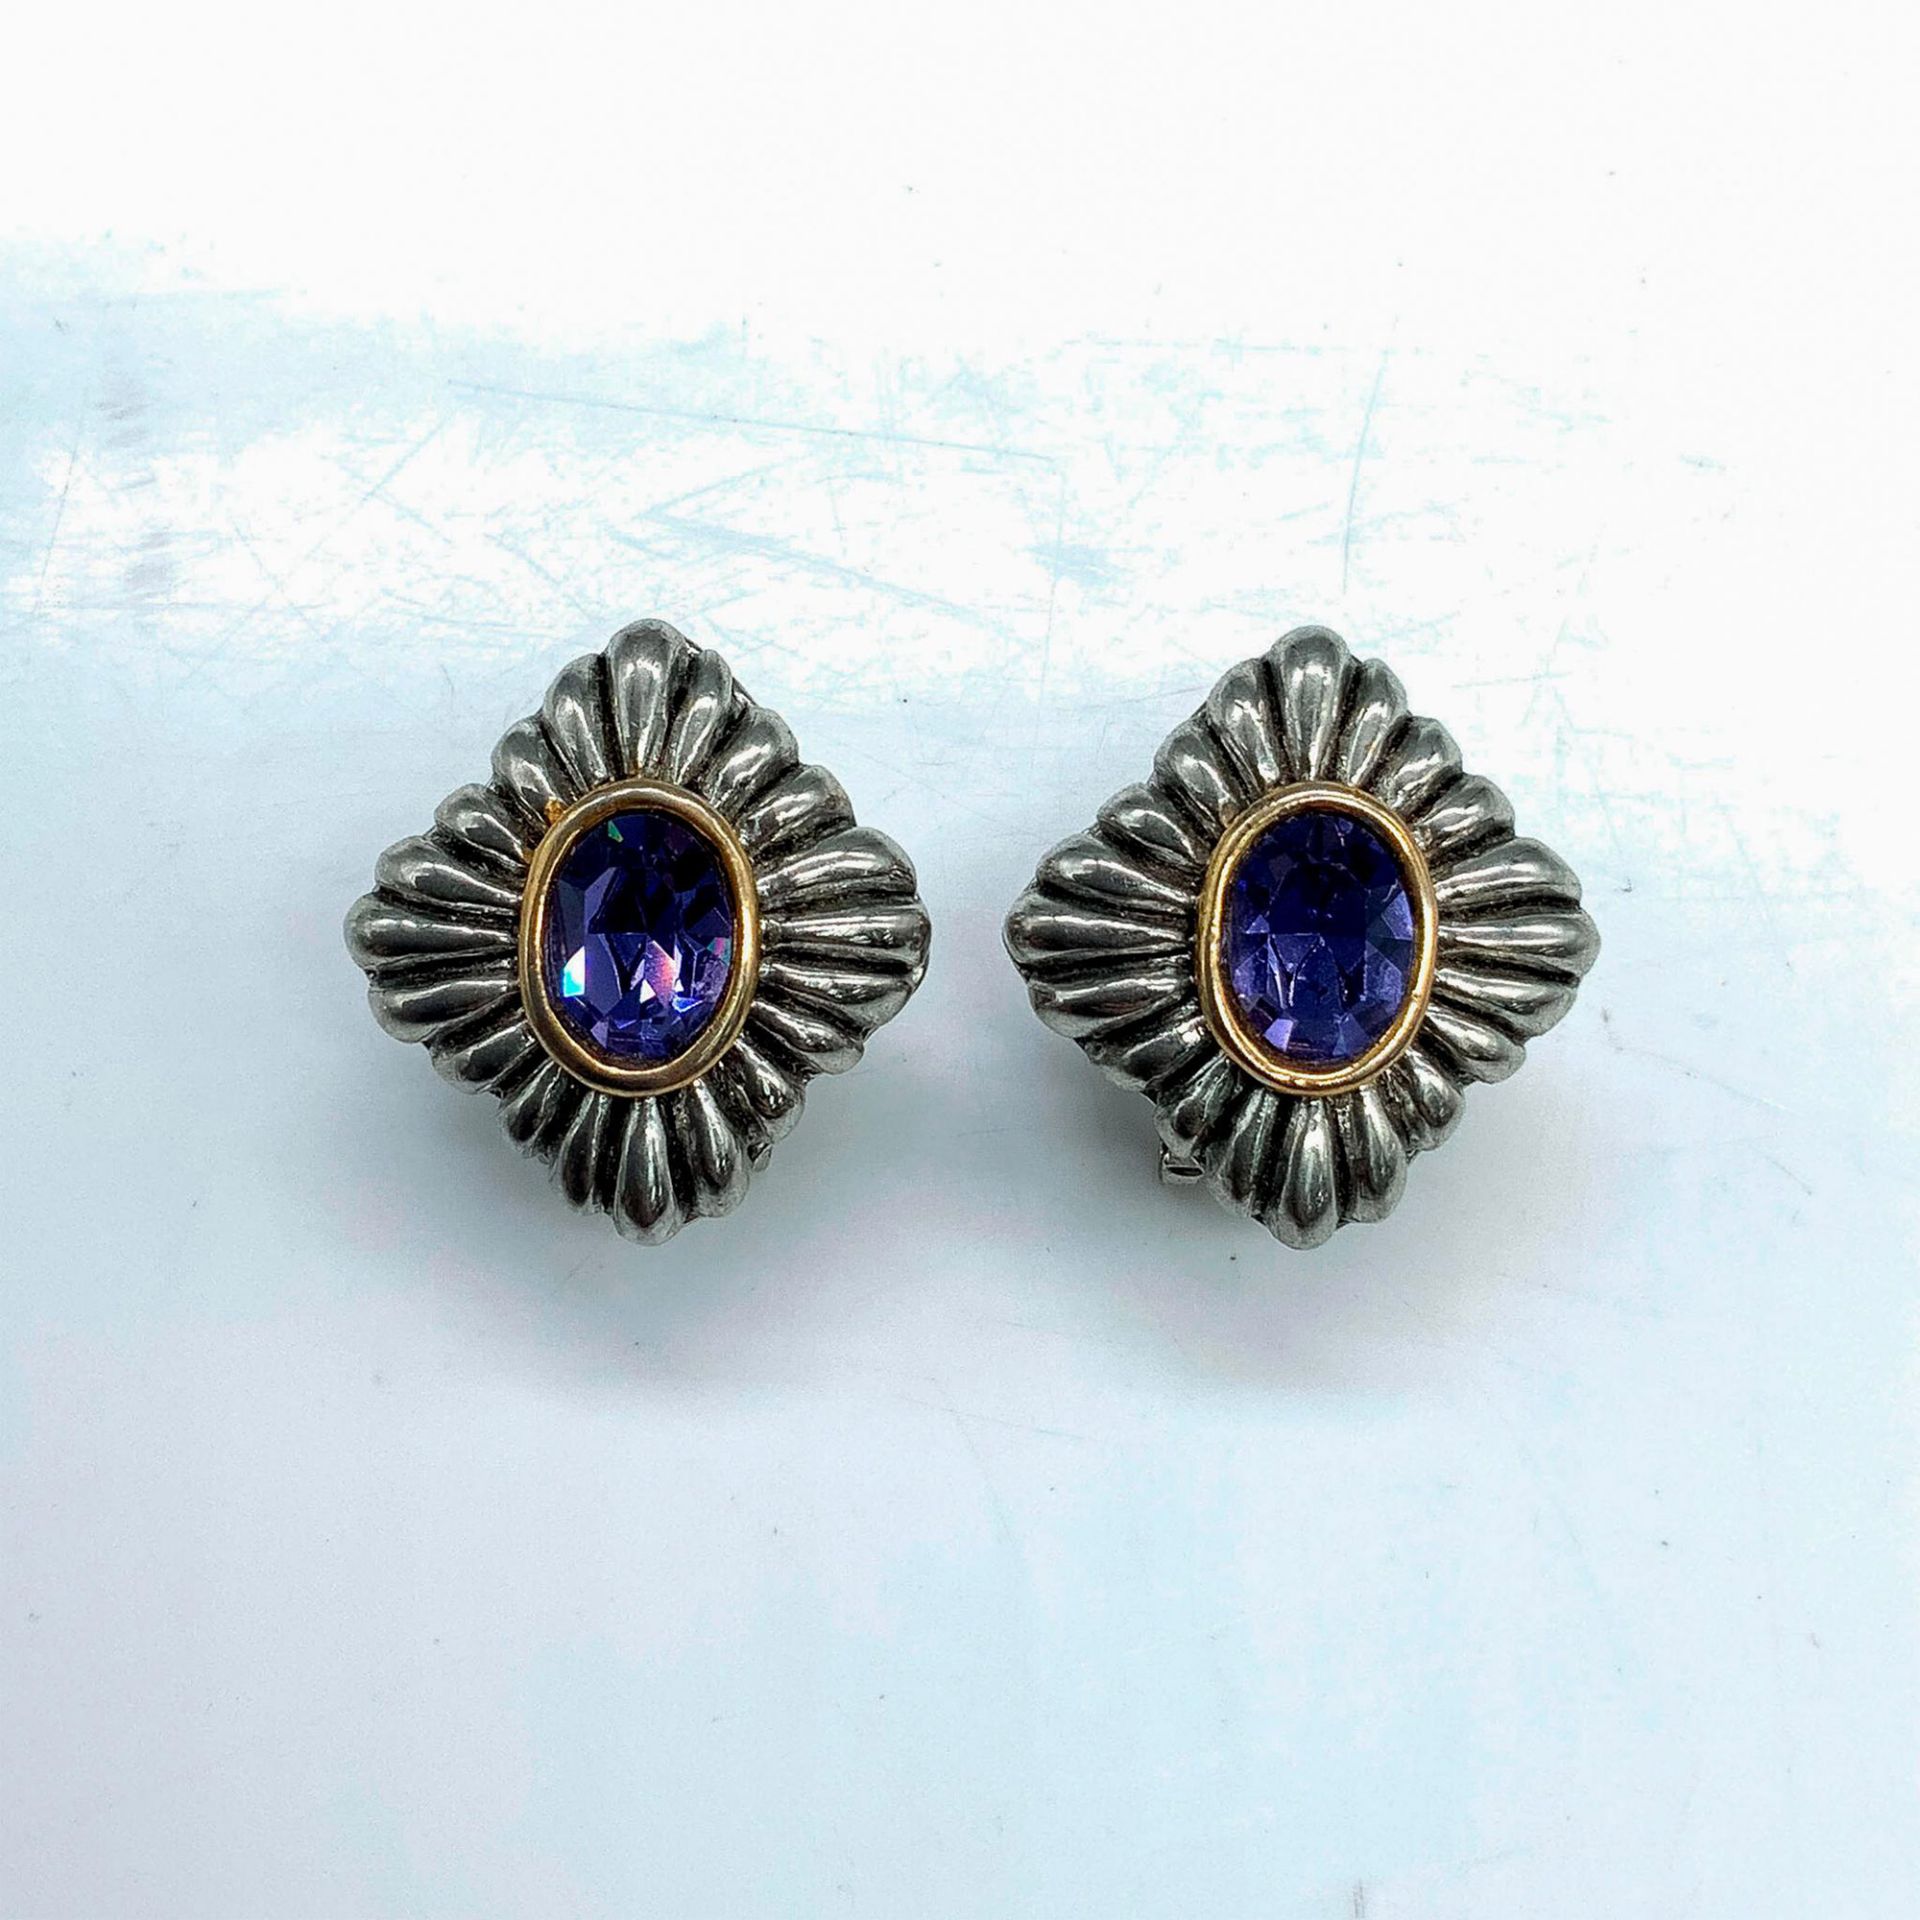 David Yurman Style Textured Sterling Silver & Amethyst Earrings - Image 2 of 3